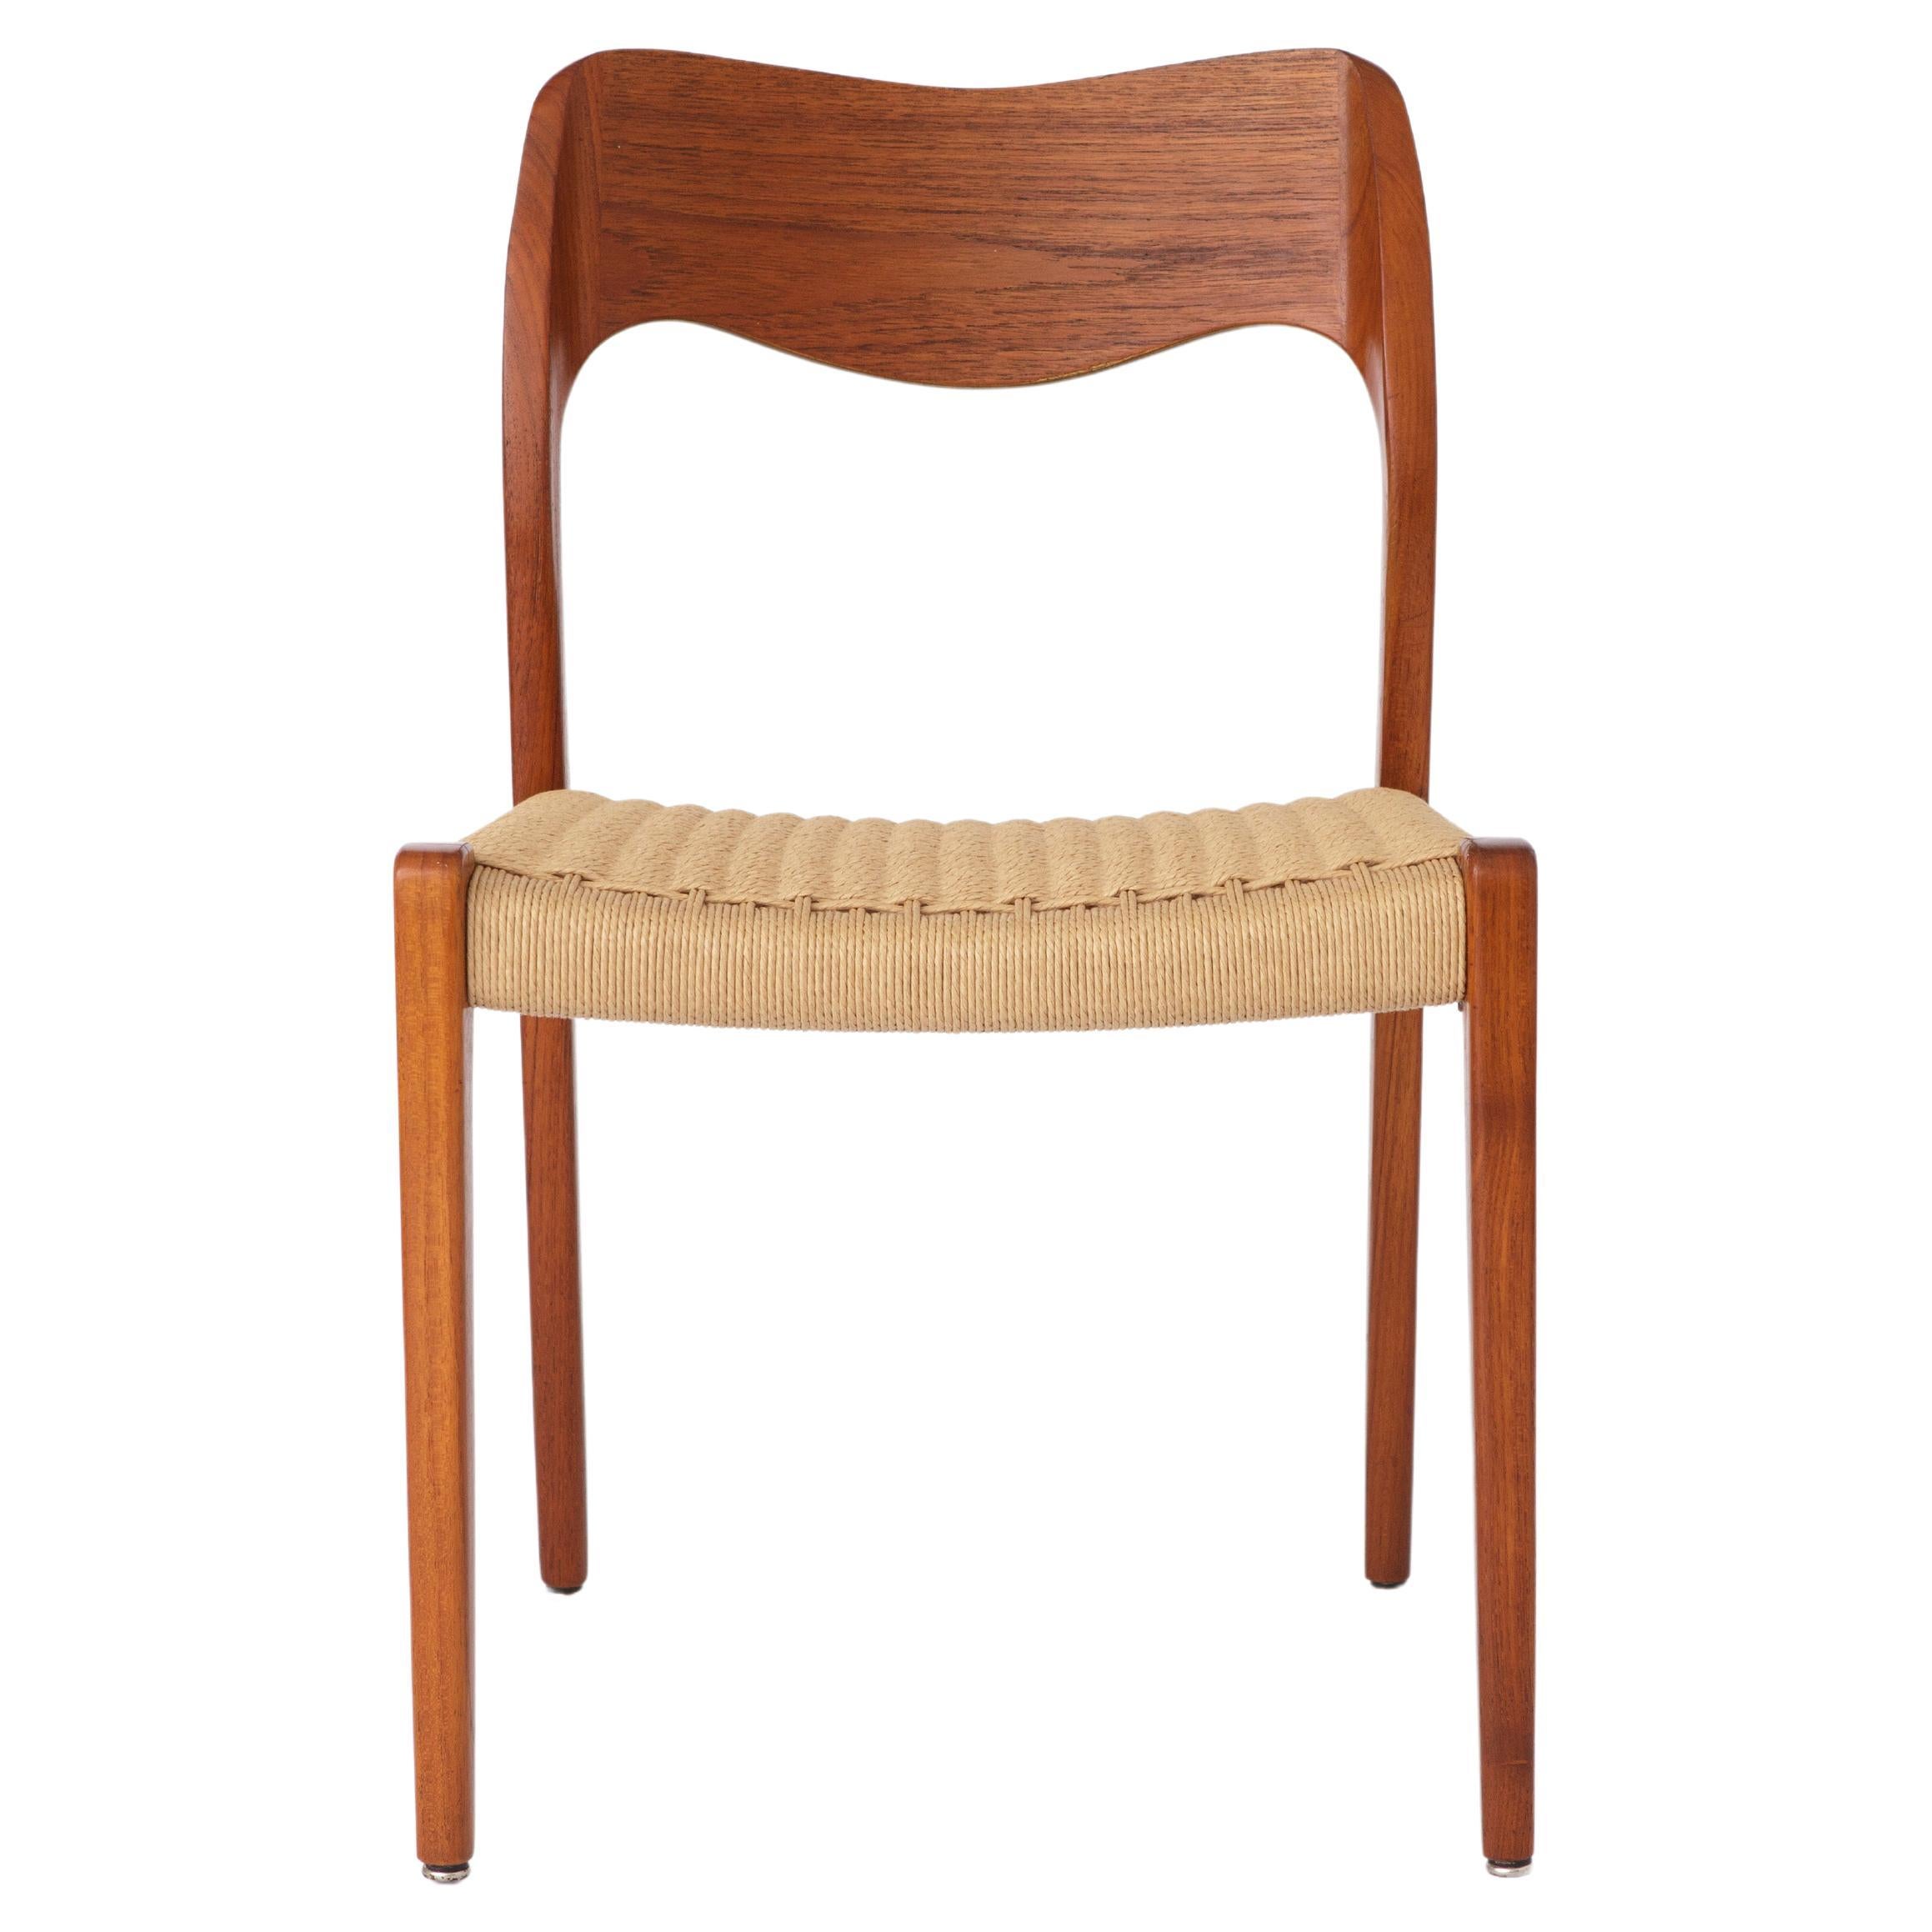 Niels Moller Stuhl, Modell 71, 1950er Jahre Vintage-Stuhl aus Teakholz – Replikiert